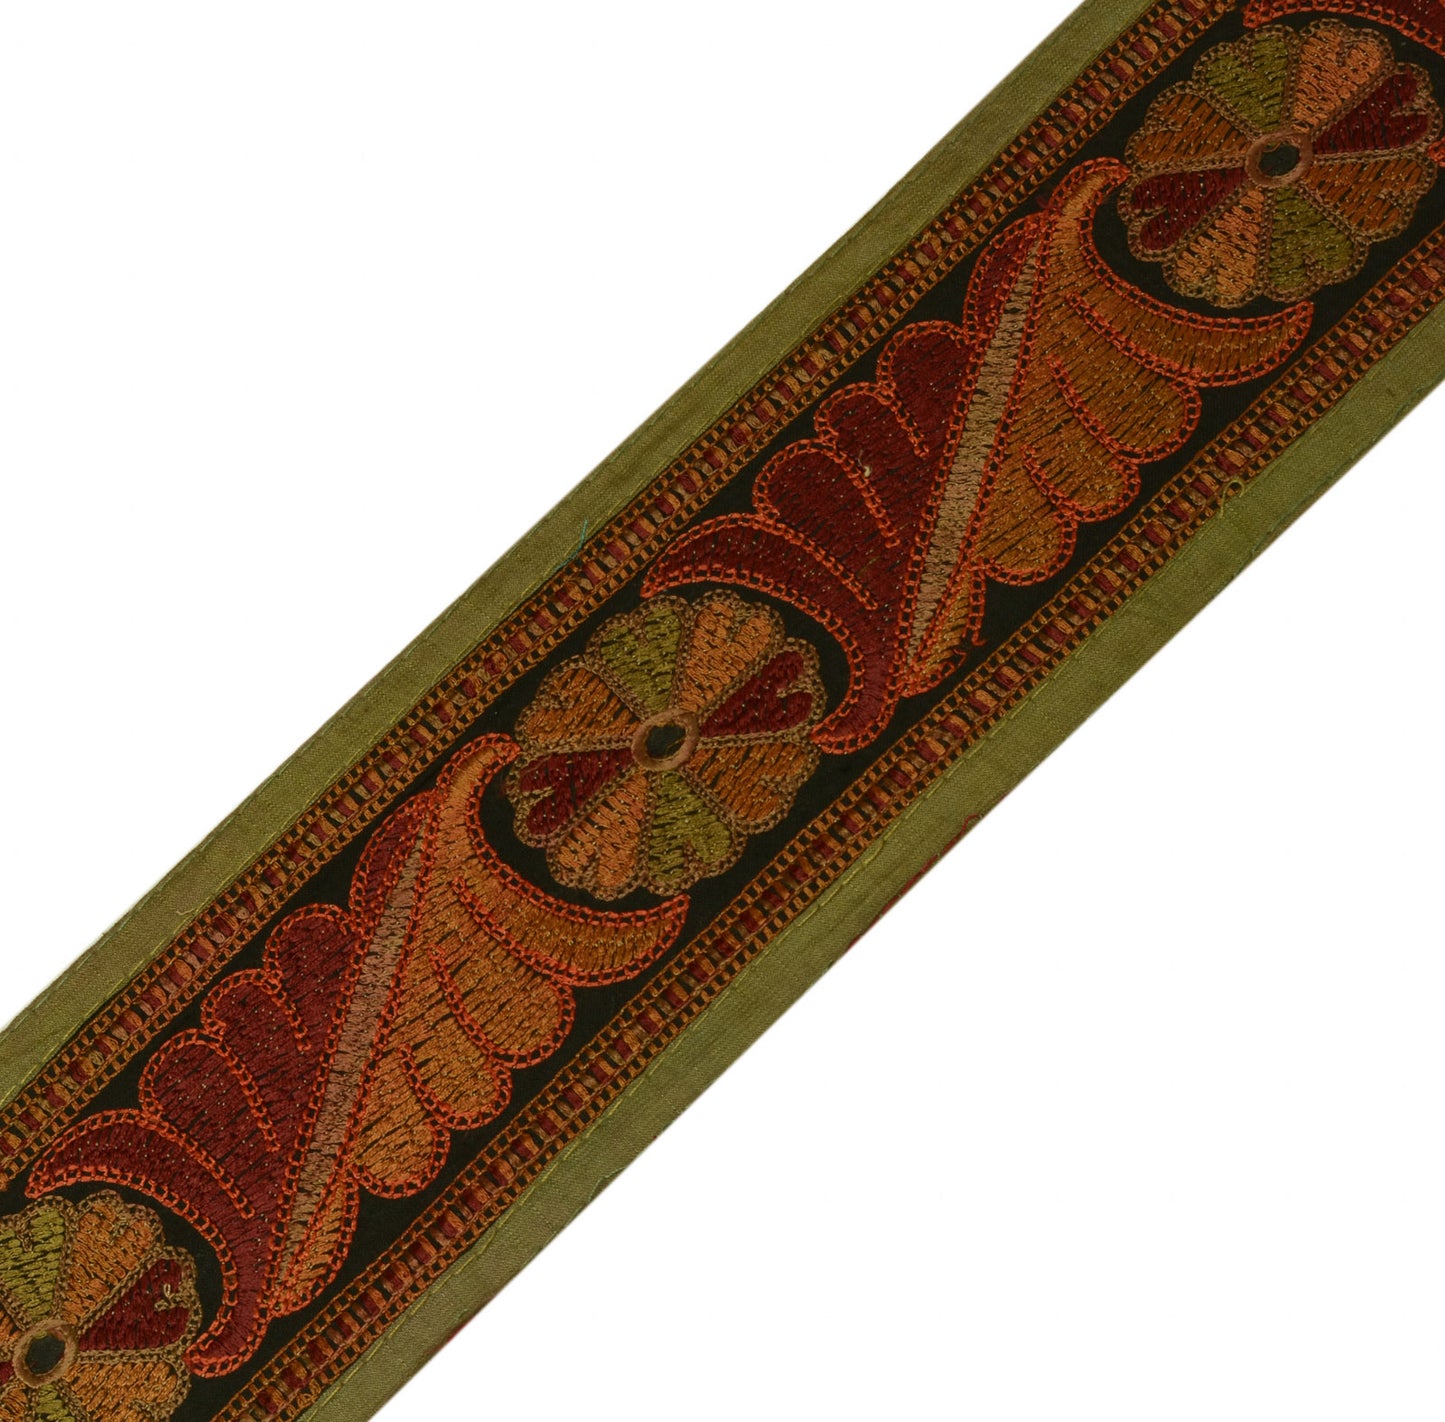 Sushila Vintage Black Saree Border Indian Craft Sewing Trim Embroidered Lace